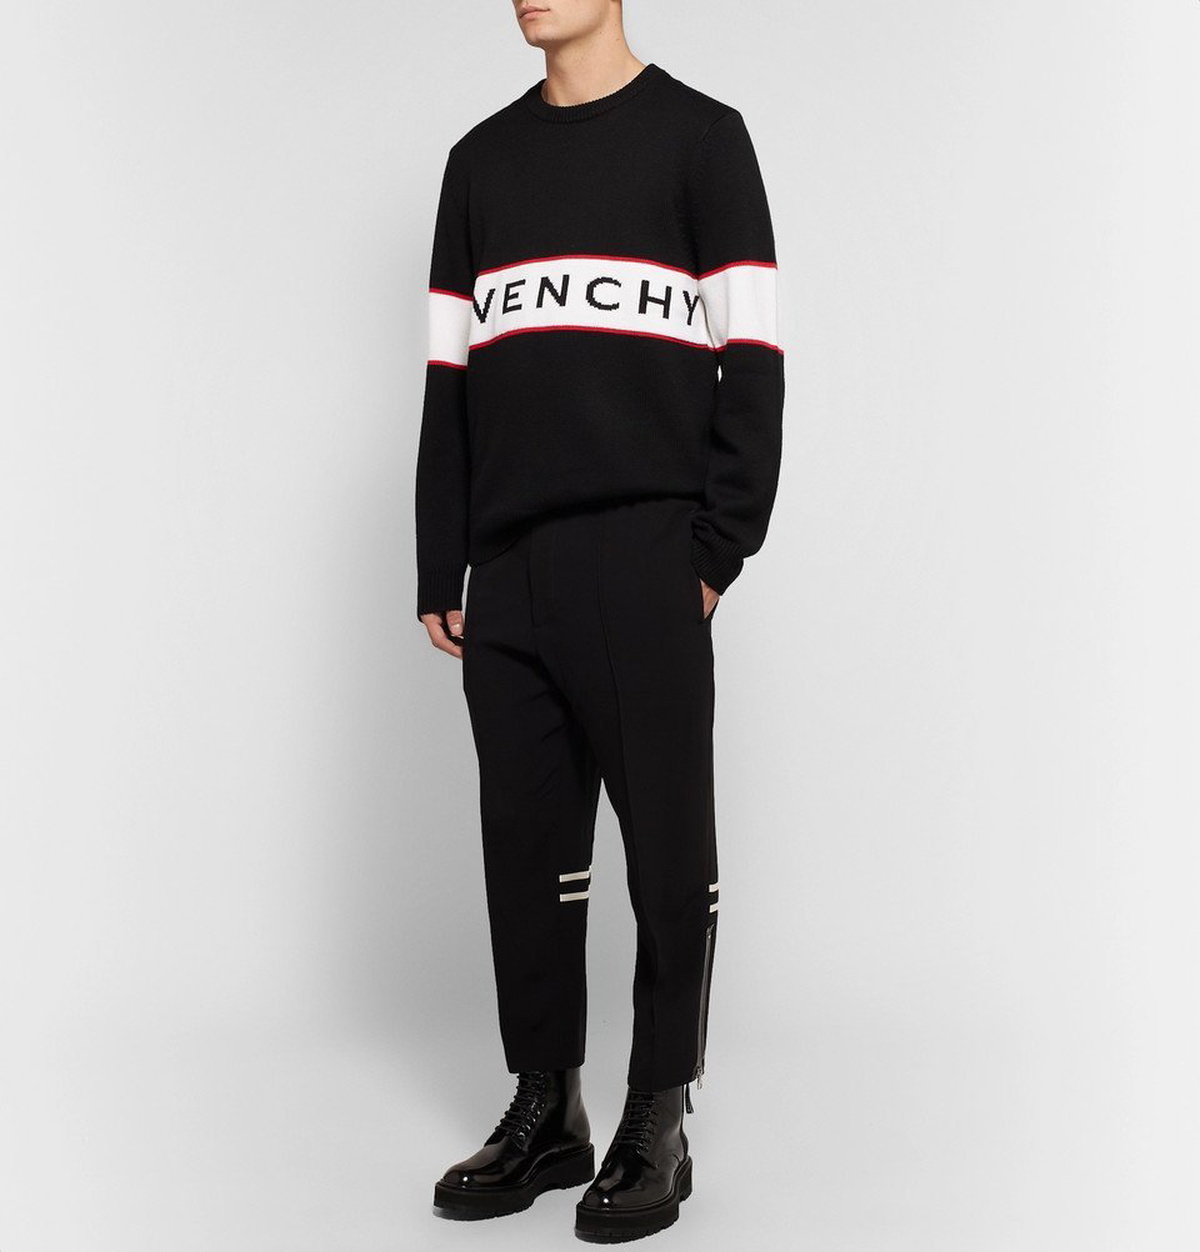 Givenchy Knitwear for Men - Farfetch